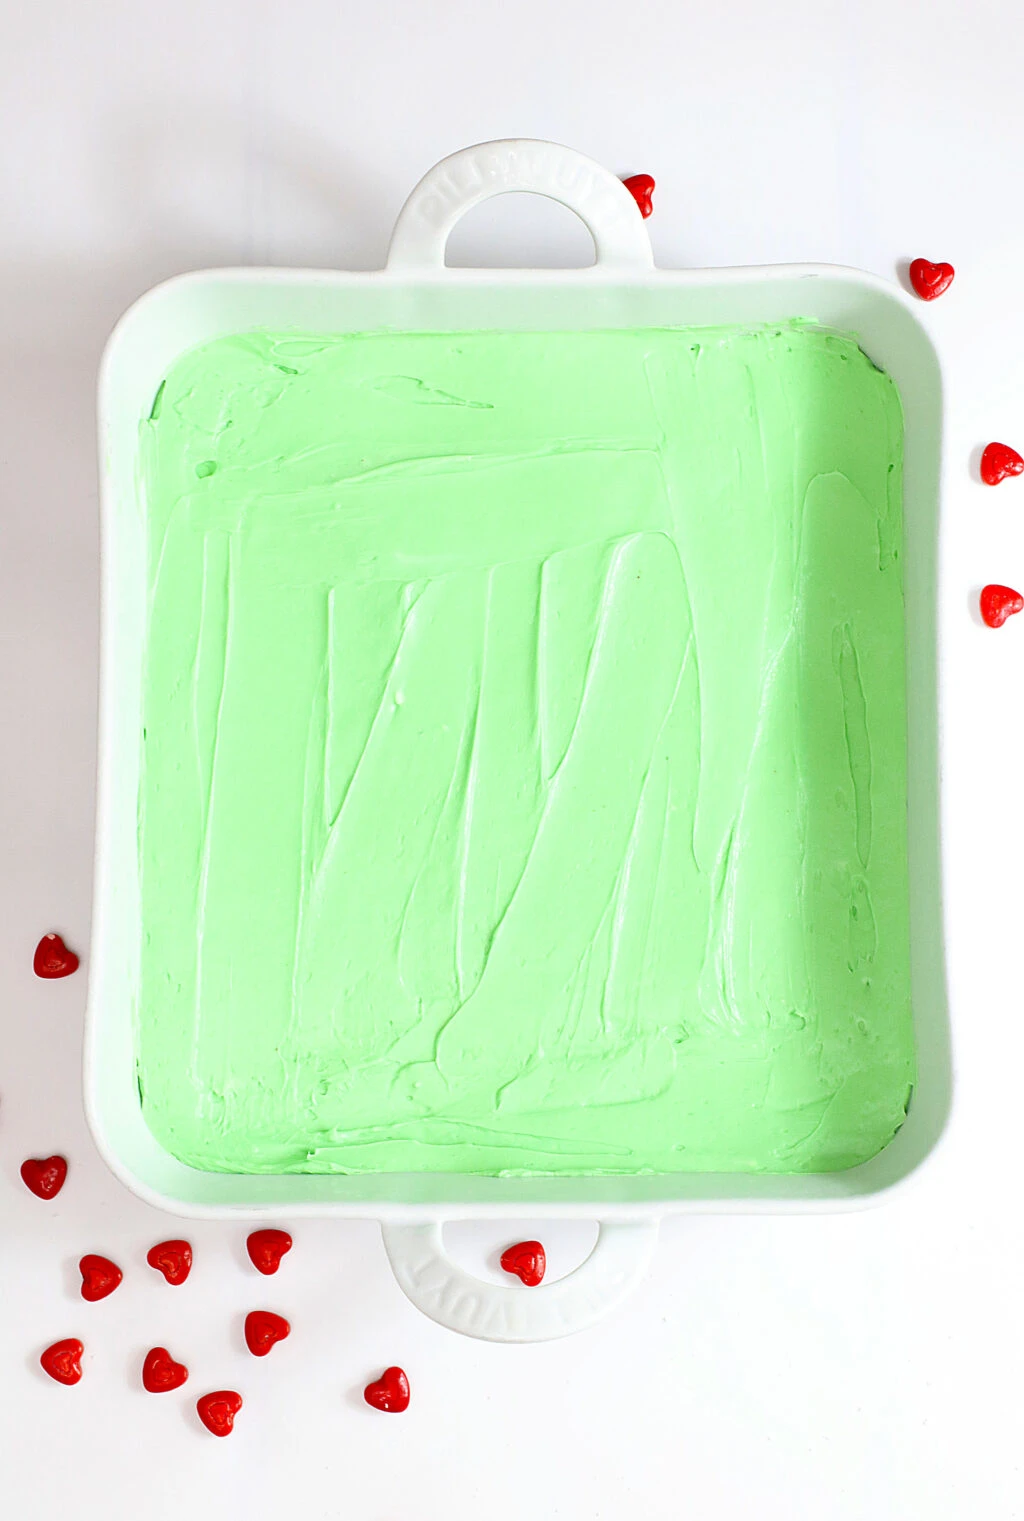 green layer added to lush dessert